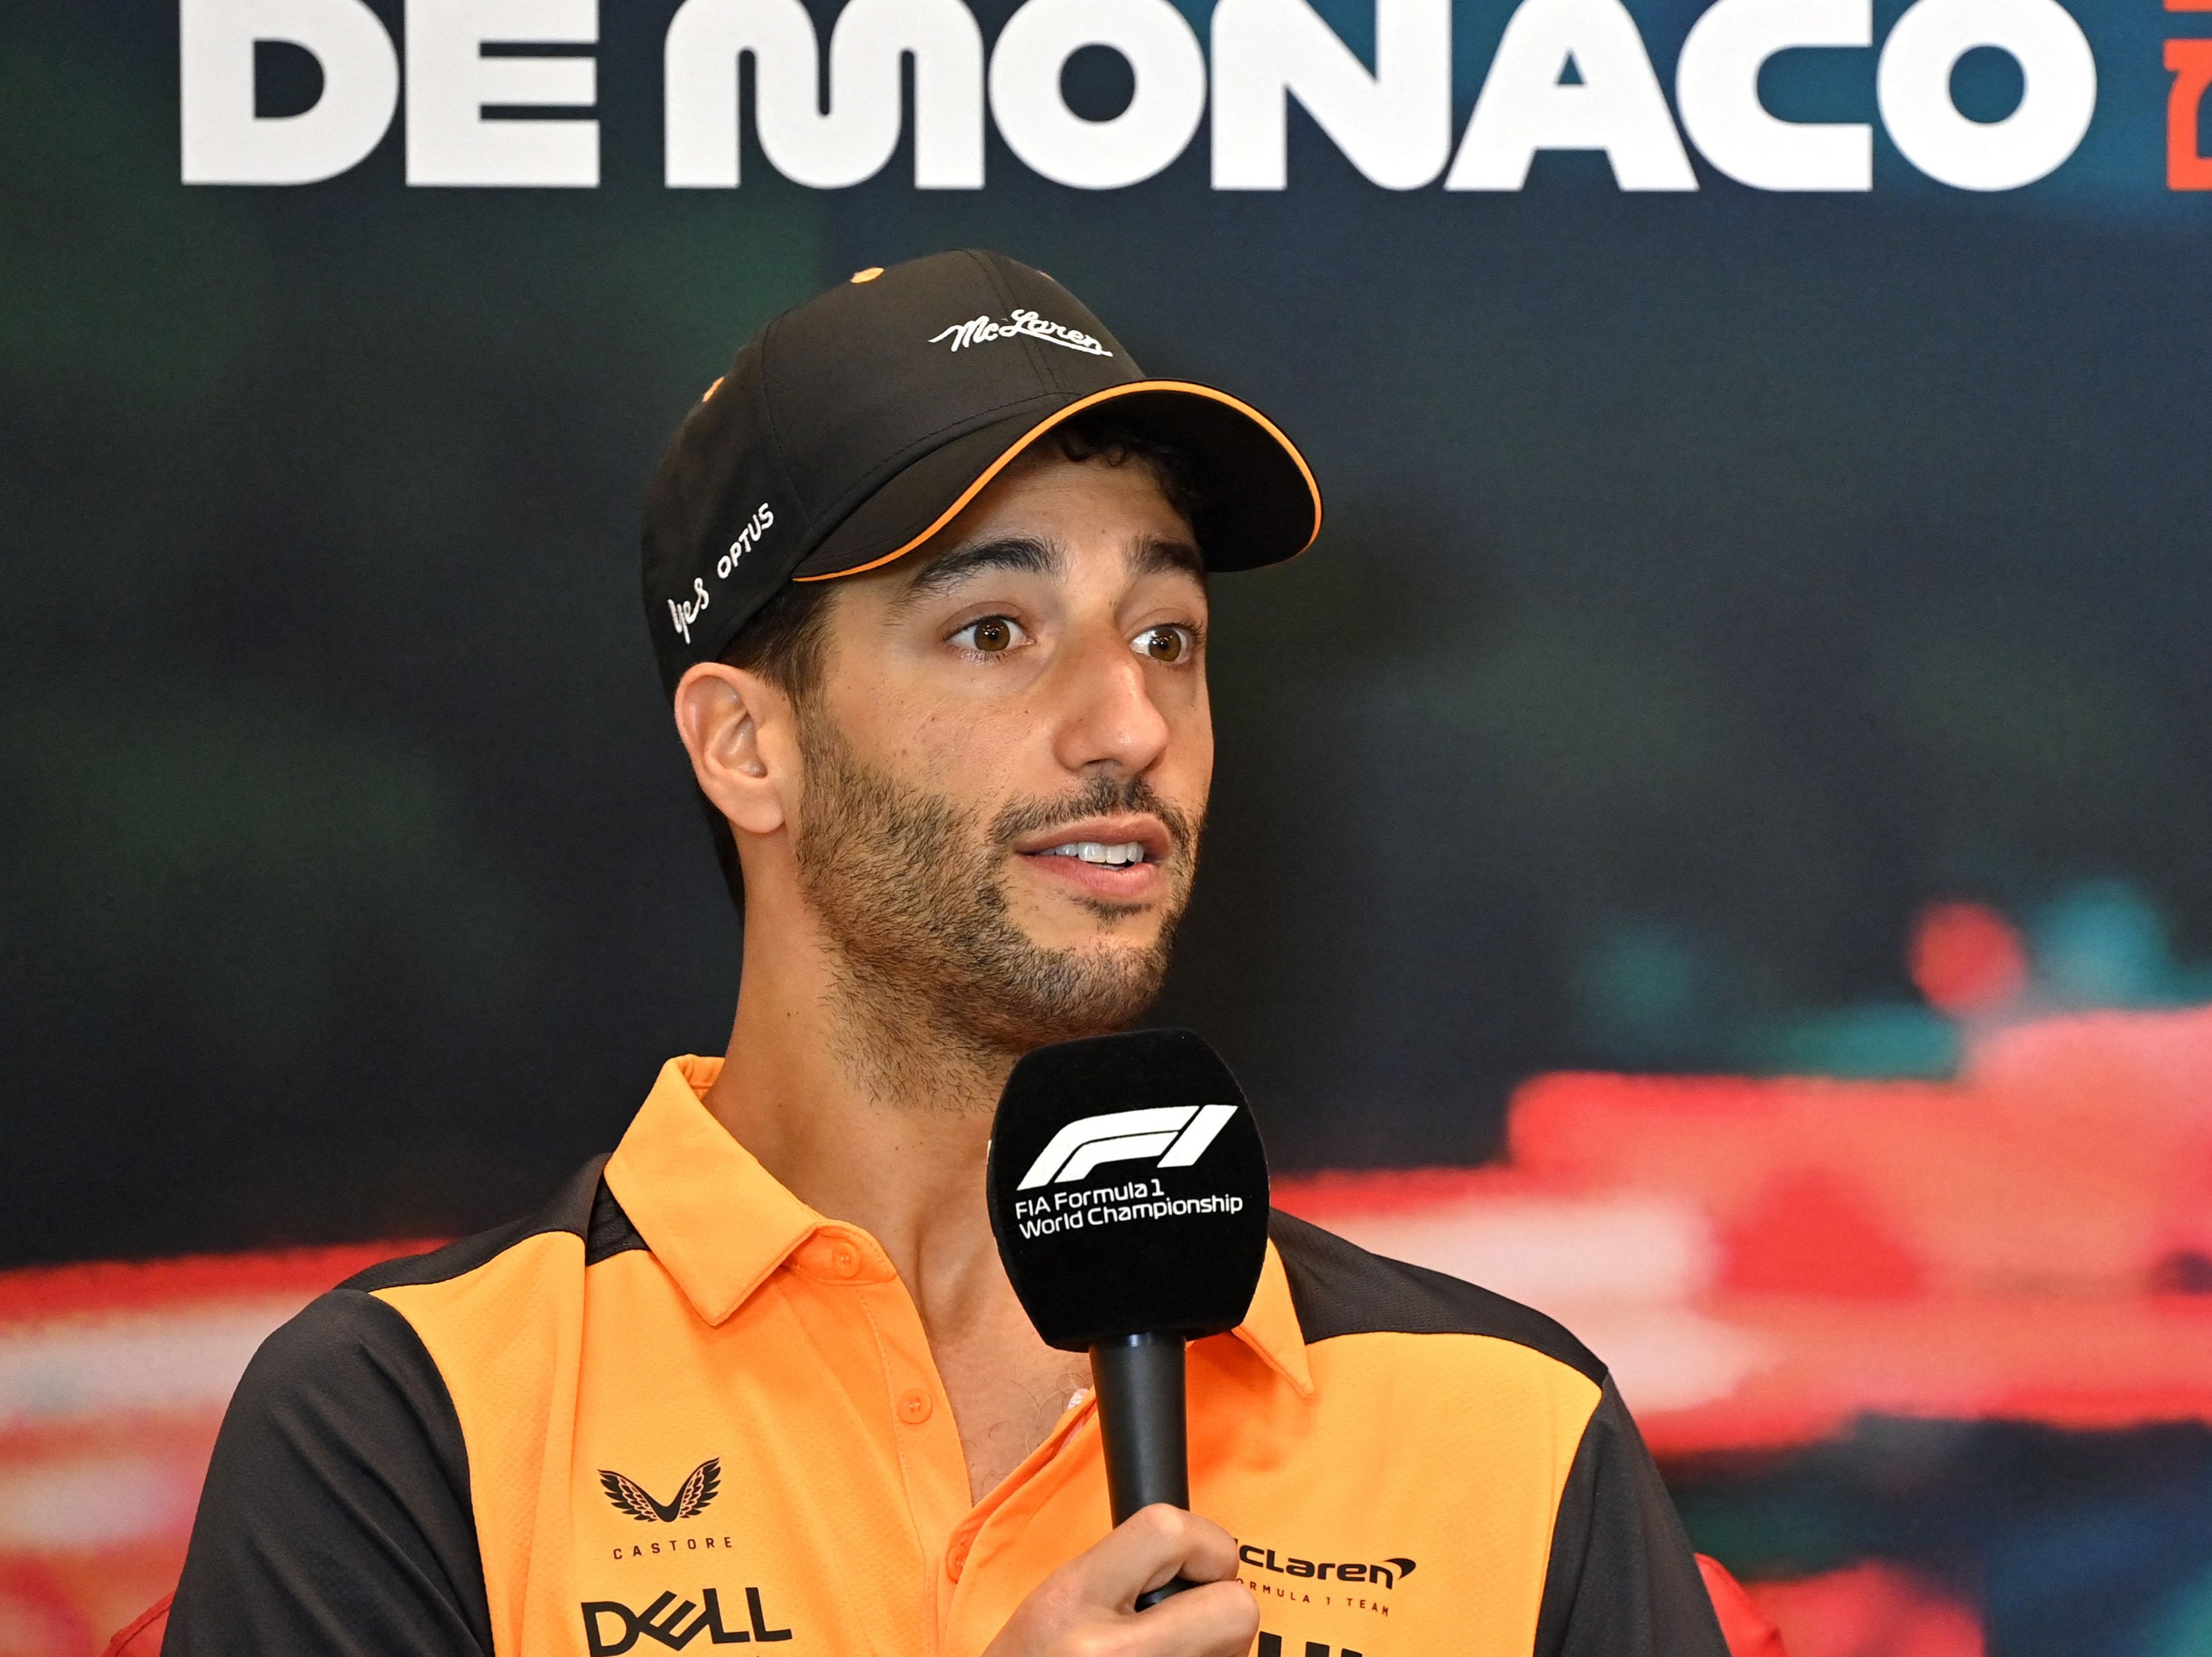 McLaren driver Daniel Ricciardo has struggled since joining the team in 2021